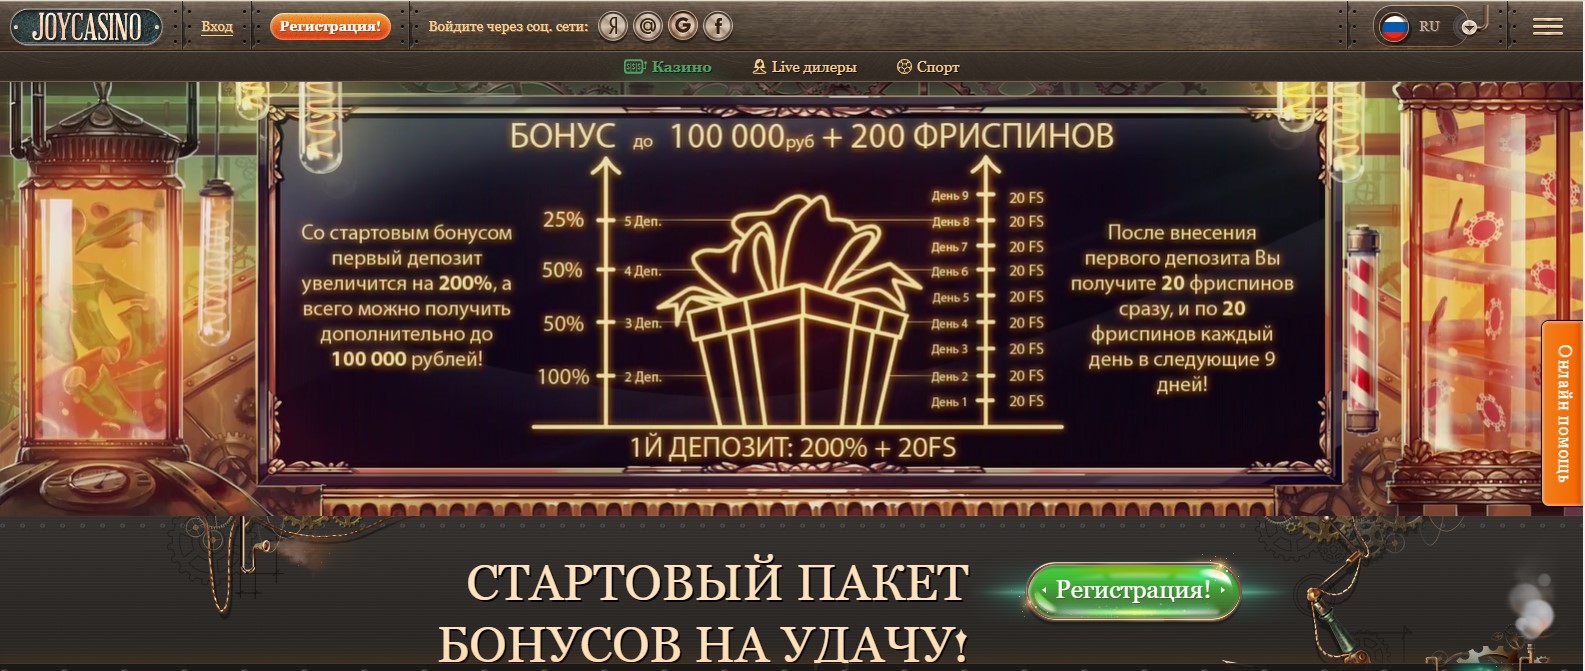 Промокод JoyCasino на бонусы [] | ВКонтакте